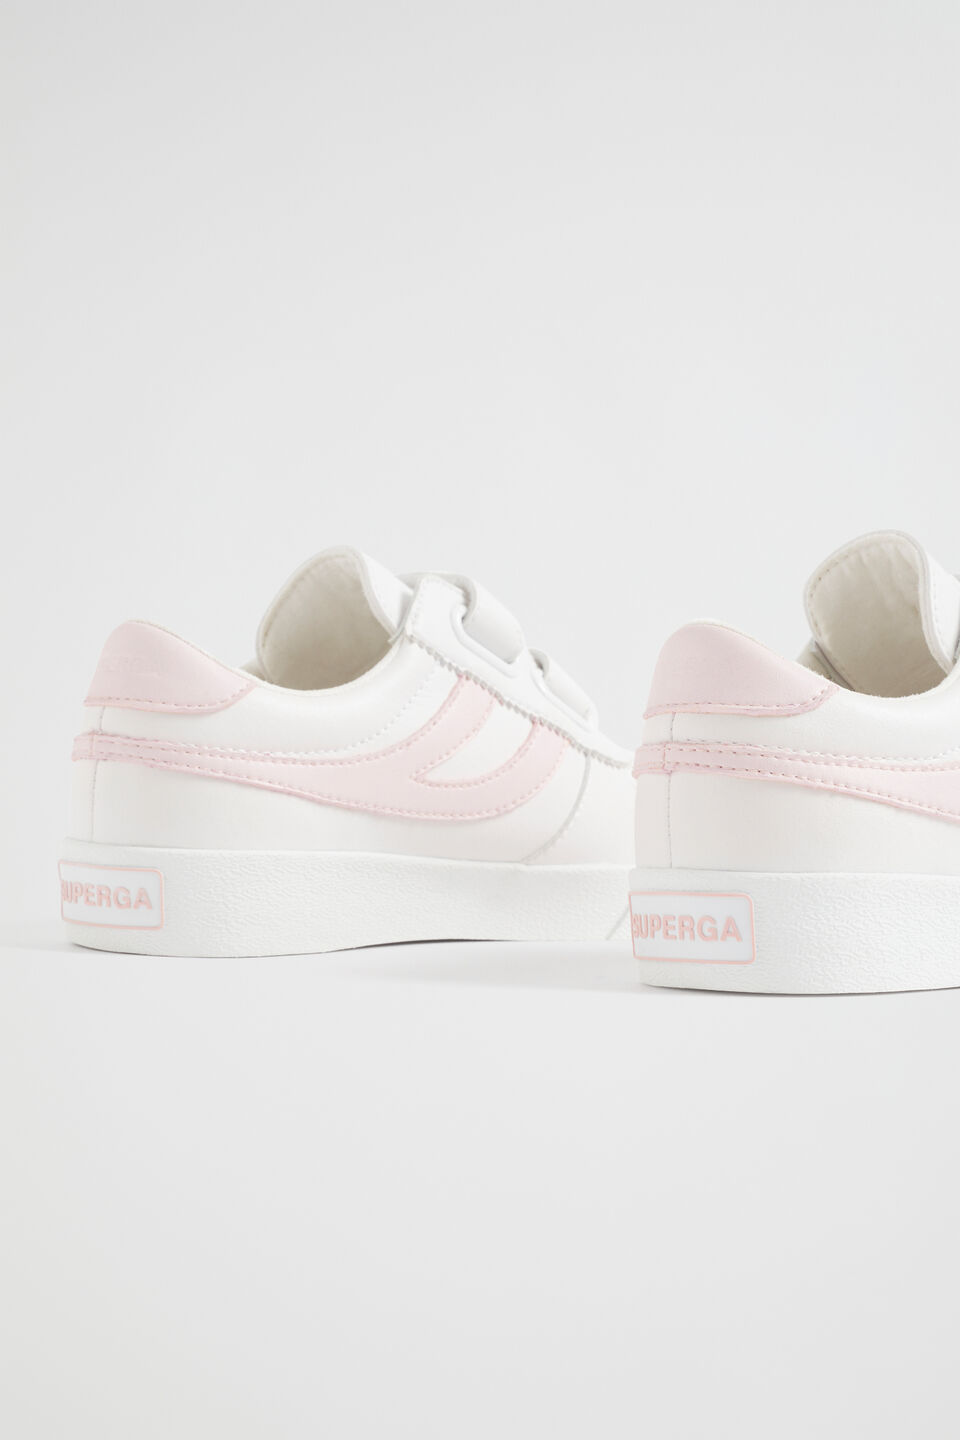 Superga Seattle Strap Sneaker  White Pink